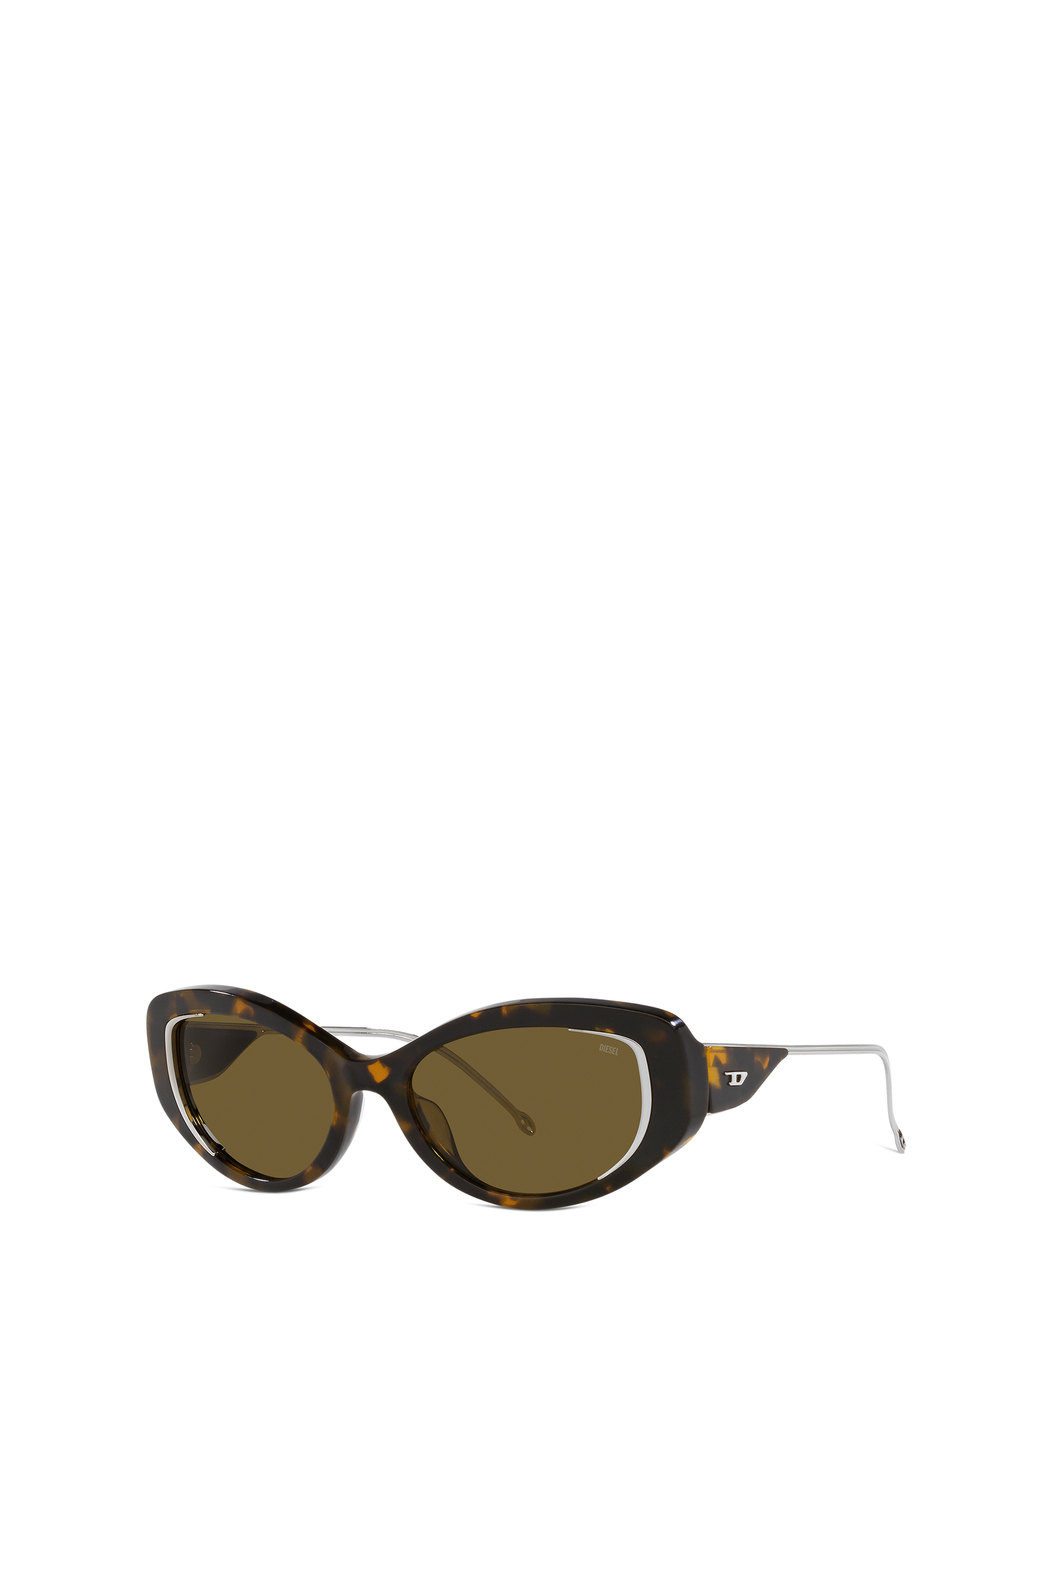 Cat-eye style sunglasses